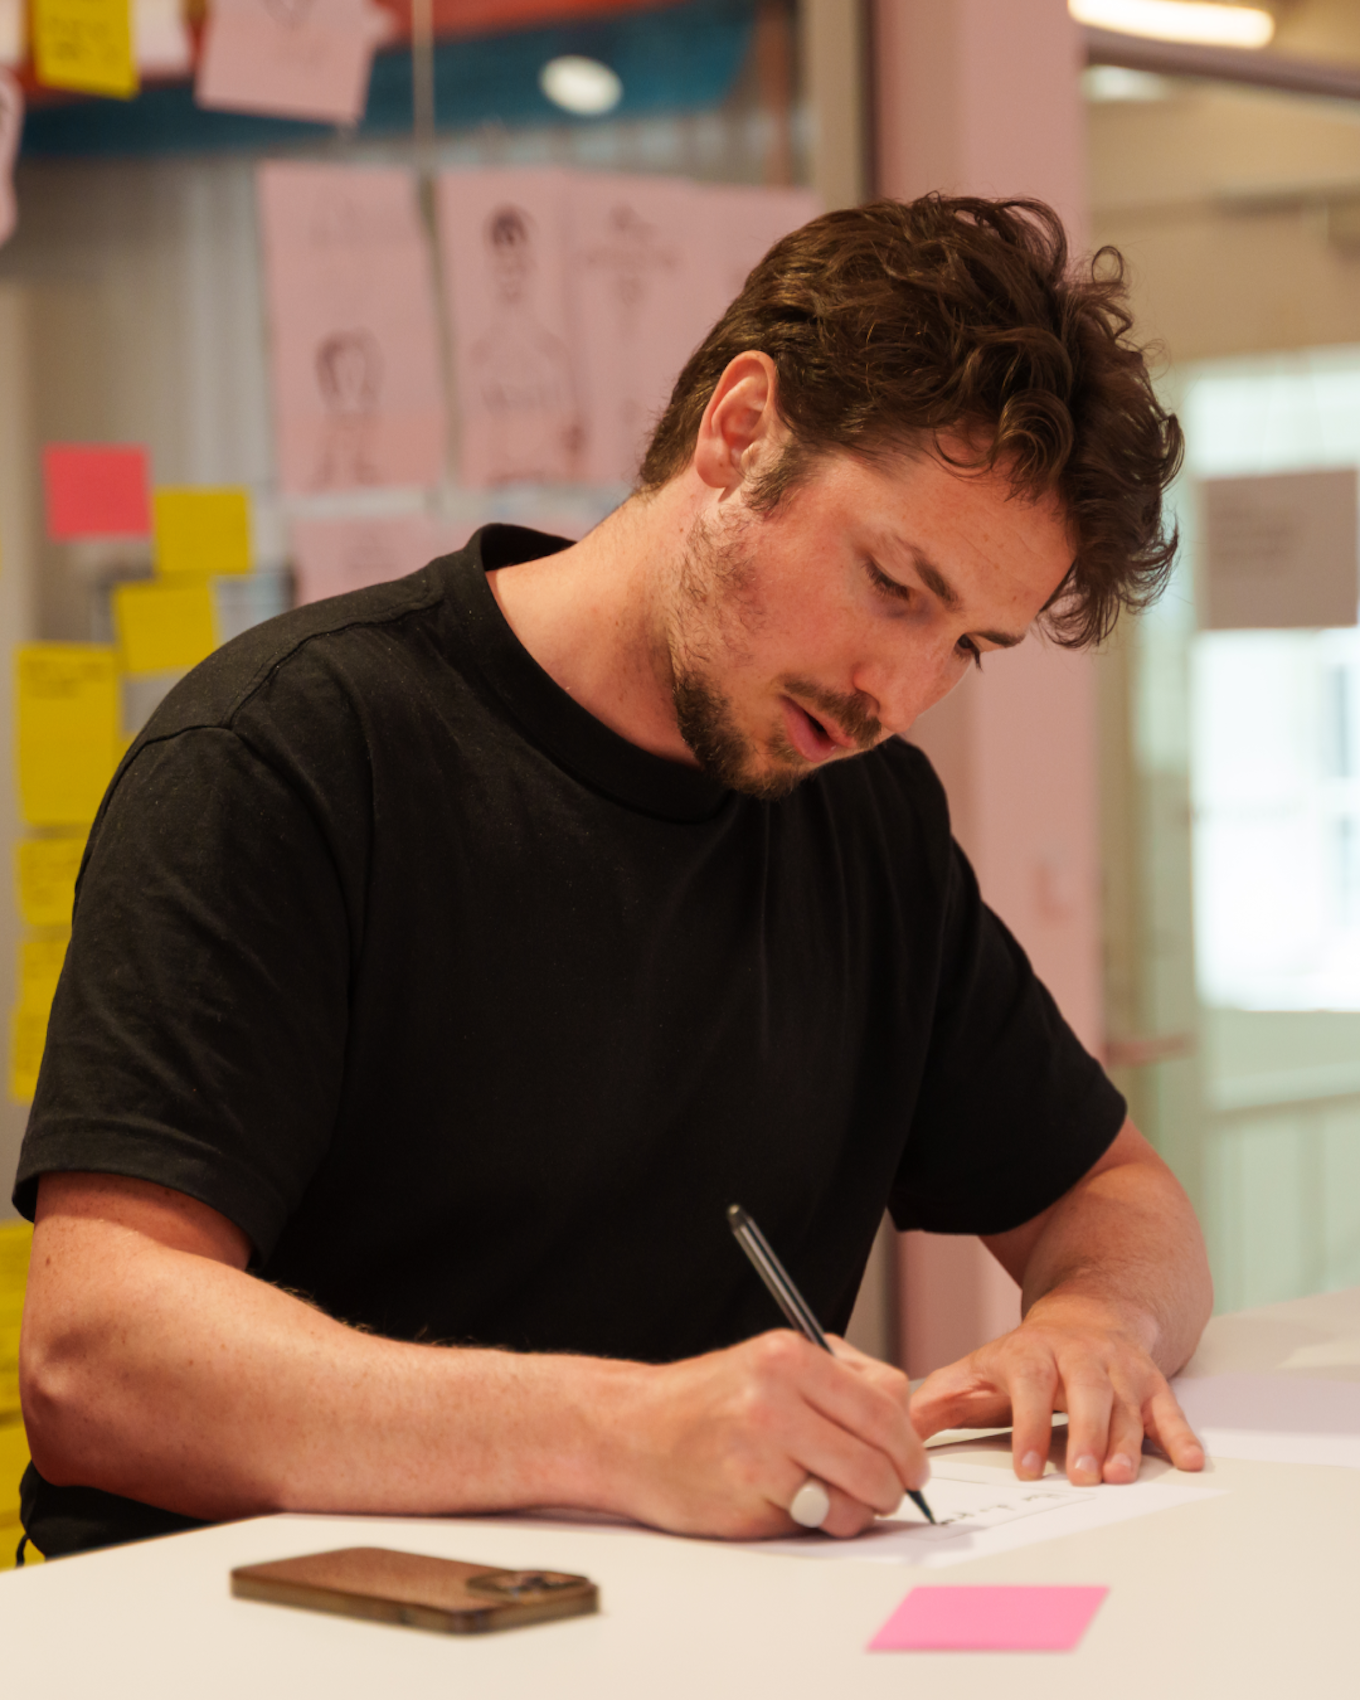 Senior UX Designer, Anders Mikkelsen